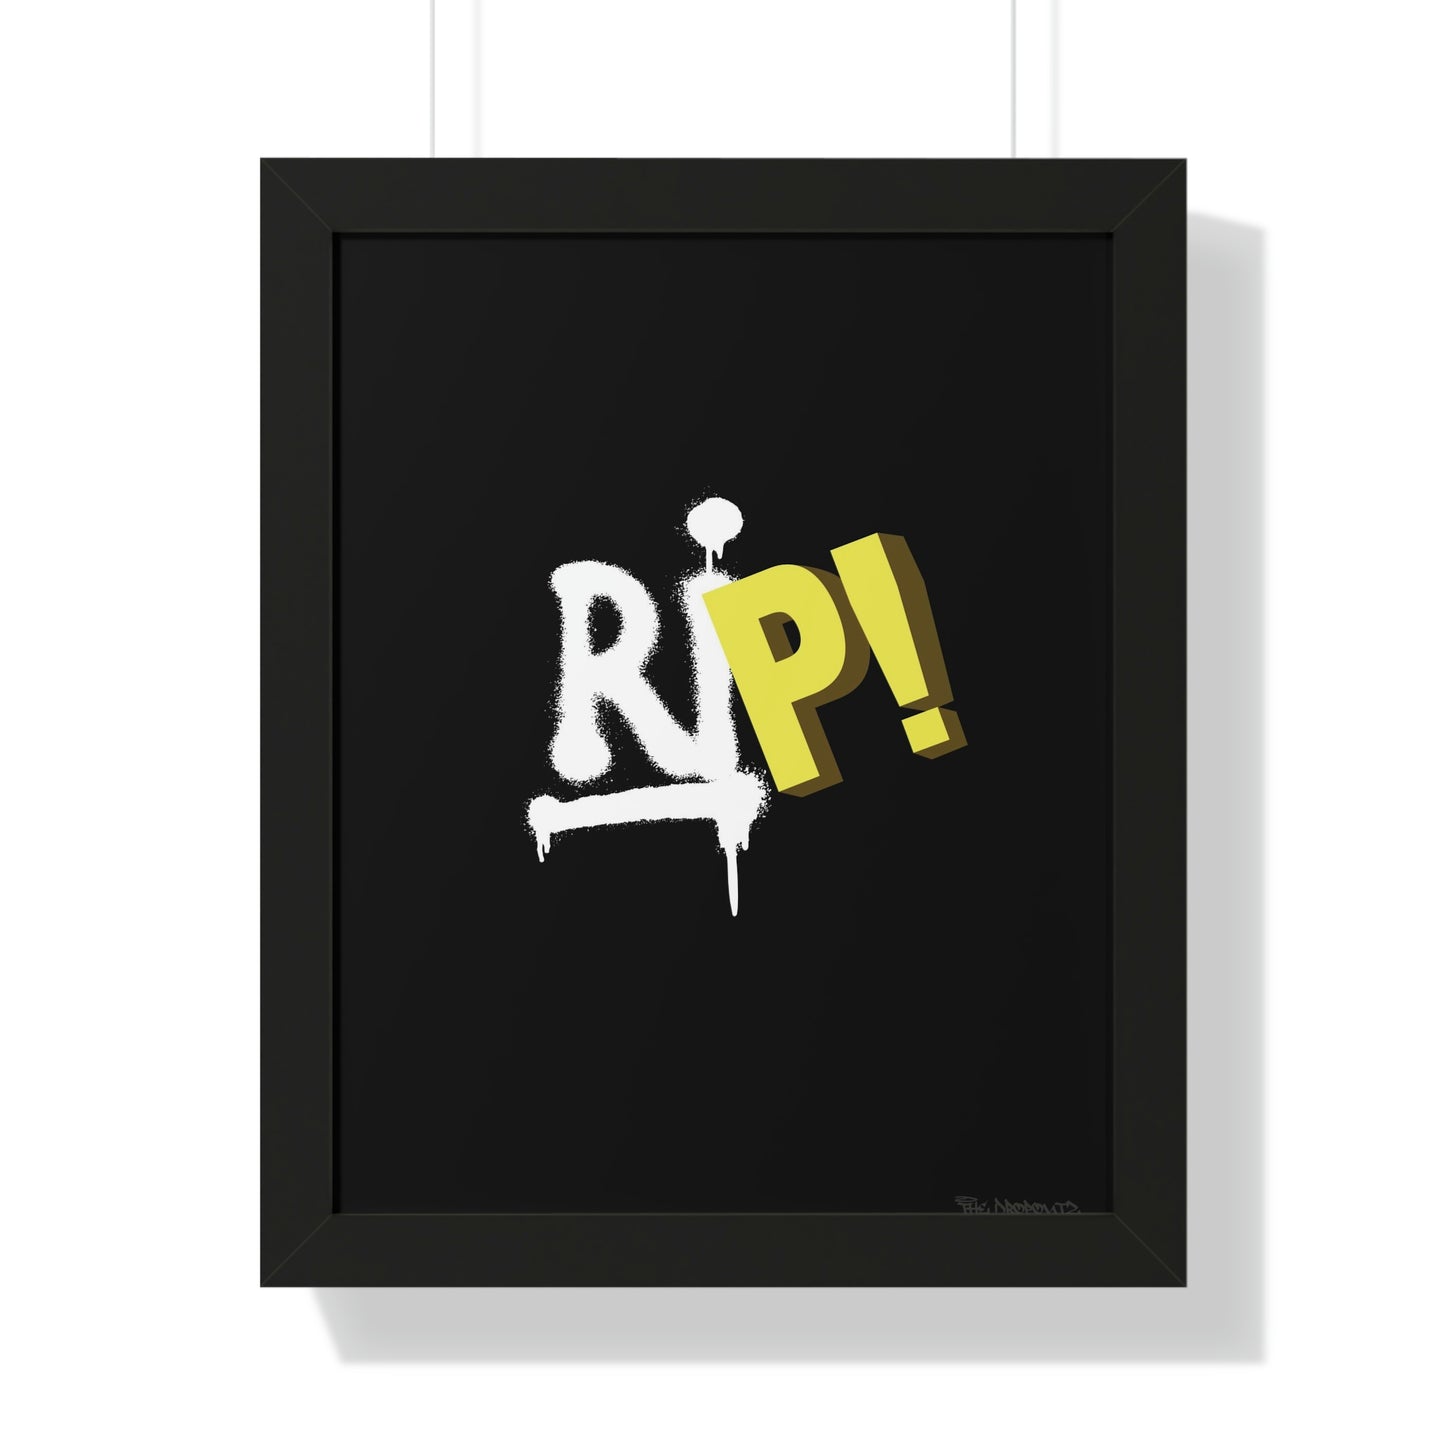 Sean Price - RIP! Framed Art